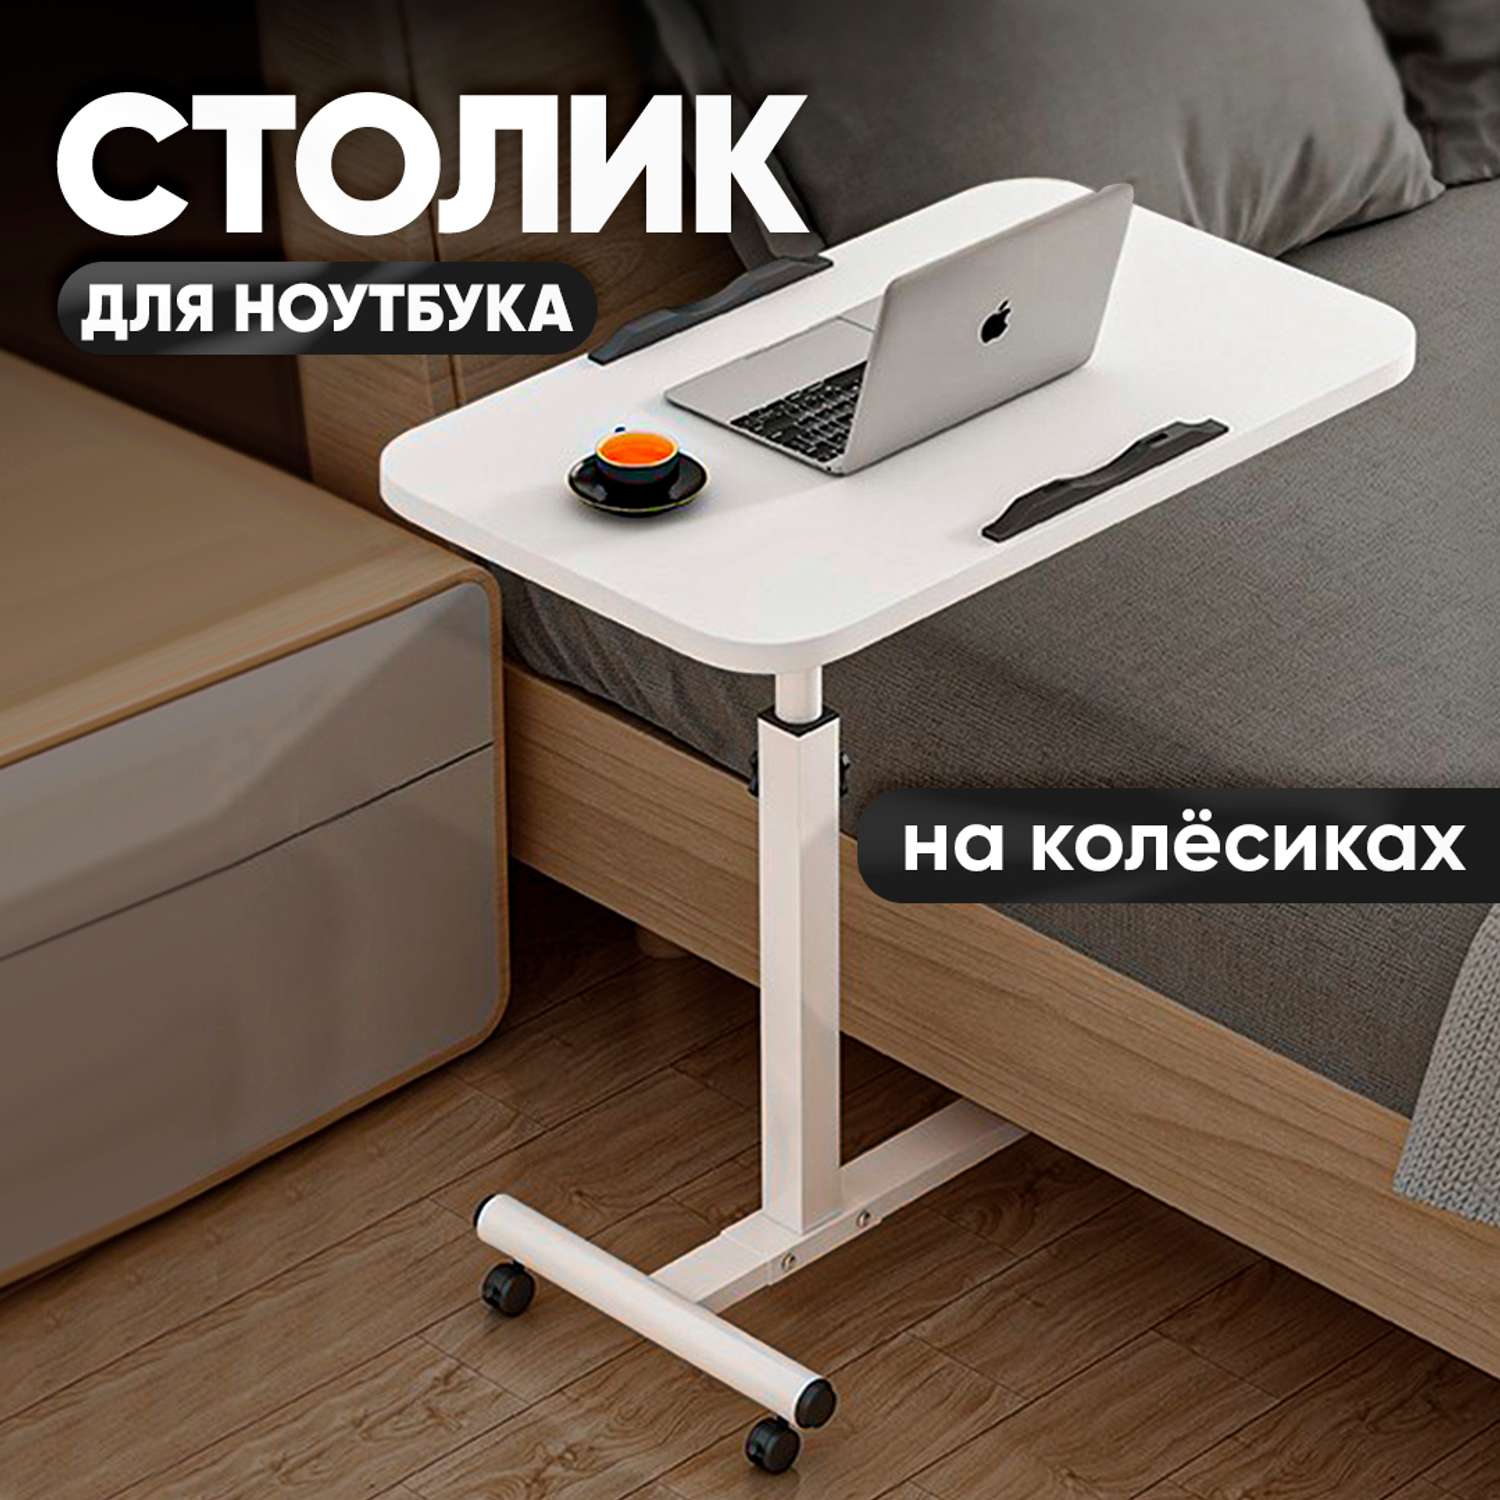 Портативный столик oqqi для ноутбука на колесиках - фото 1